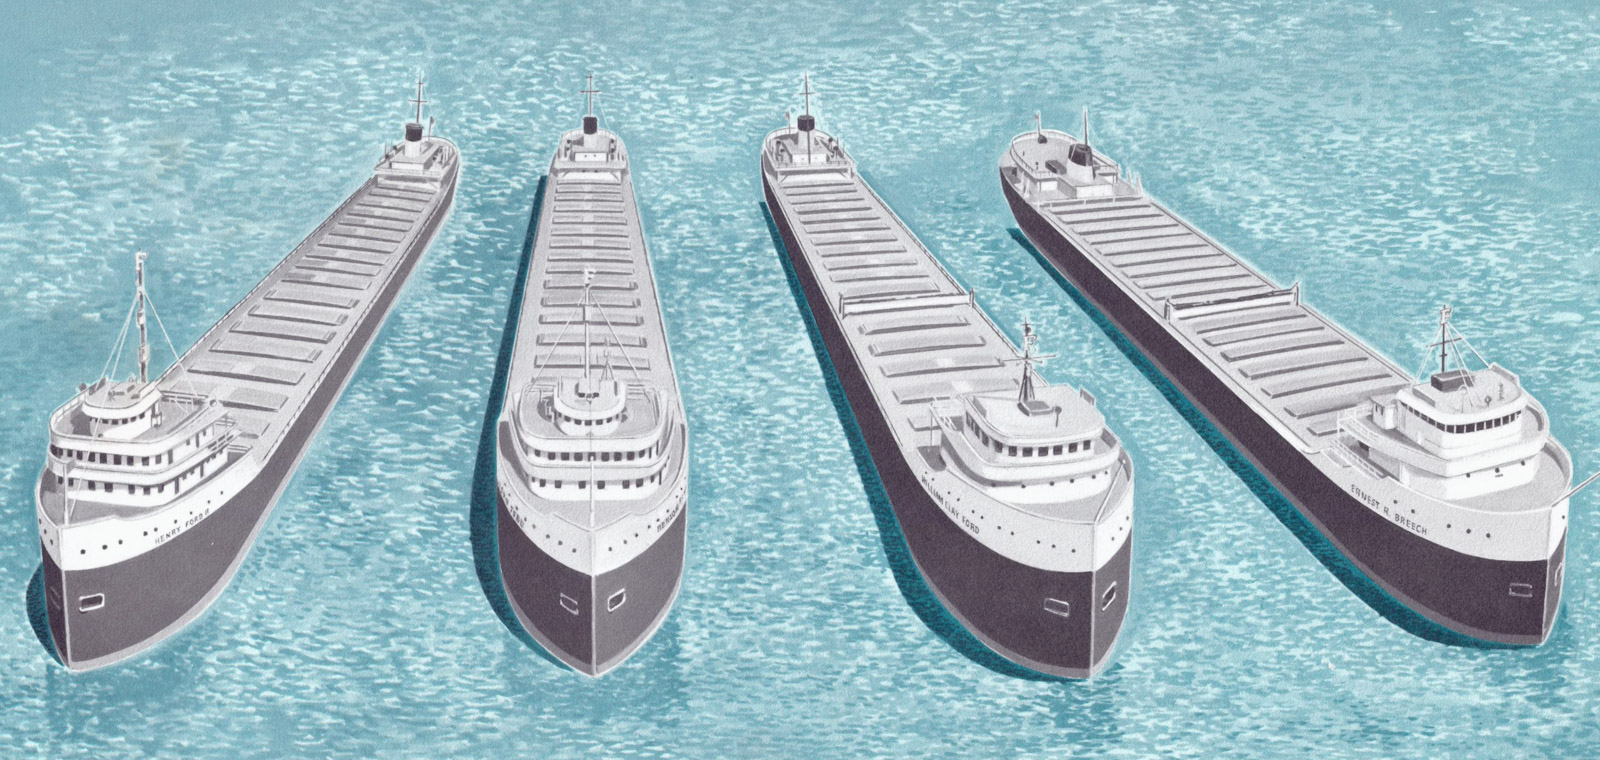 Ship drawings